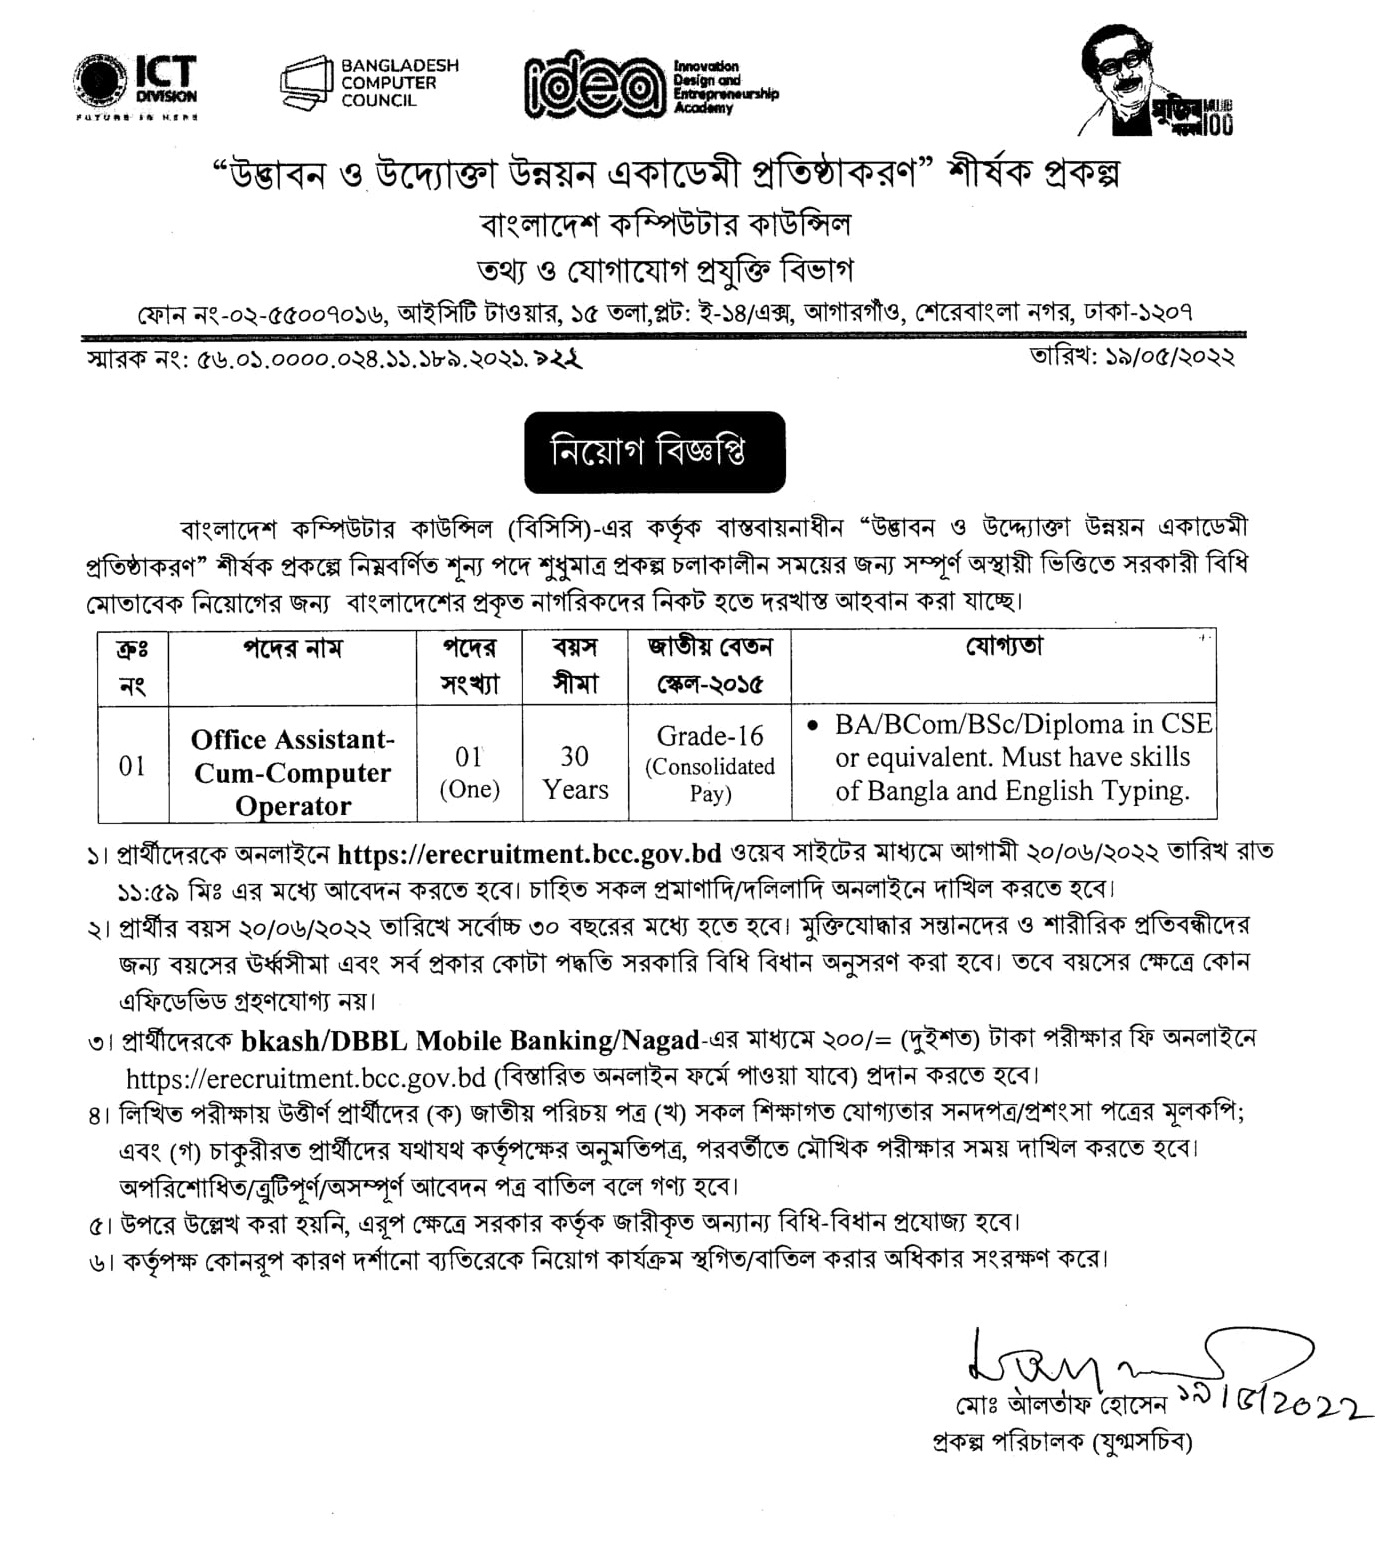 Bangladesh Computer Council Job Circular